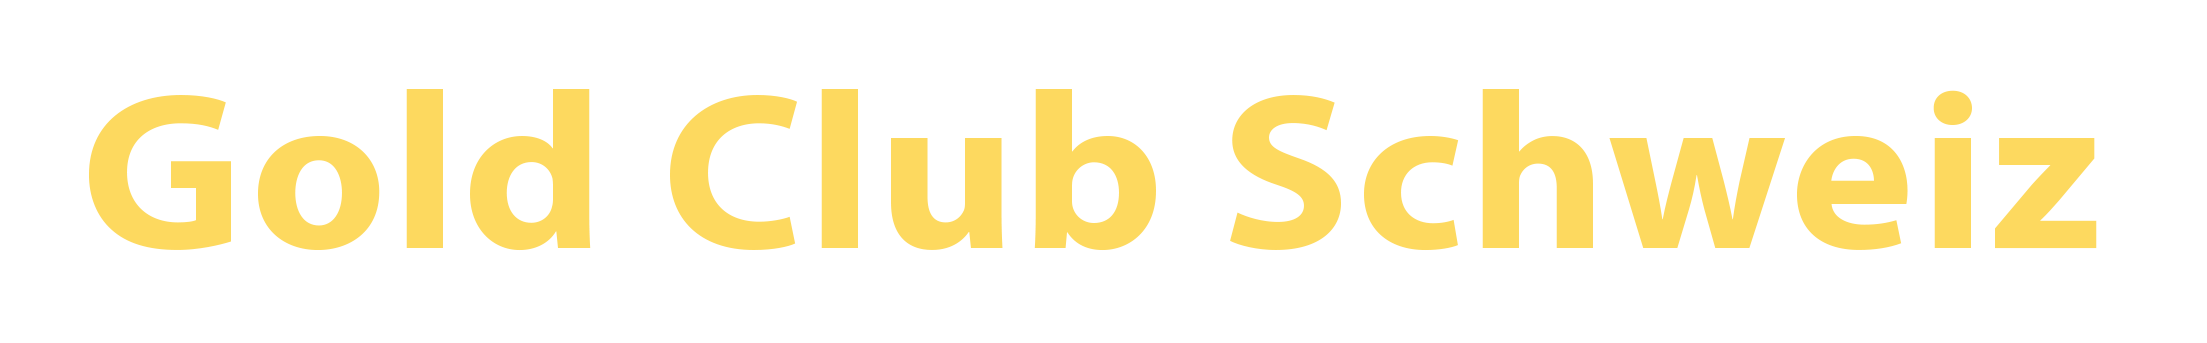 Statuten_Gold_Club